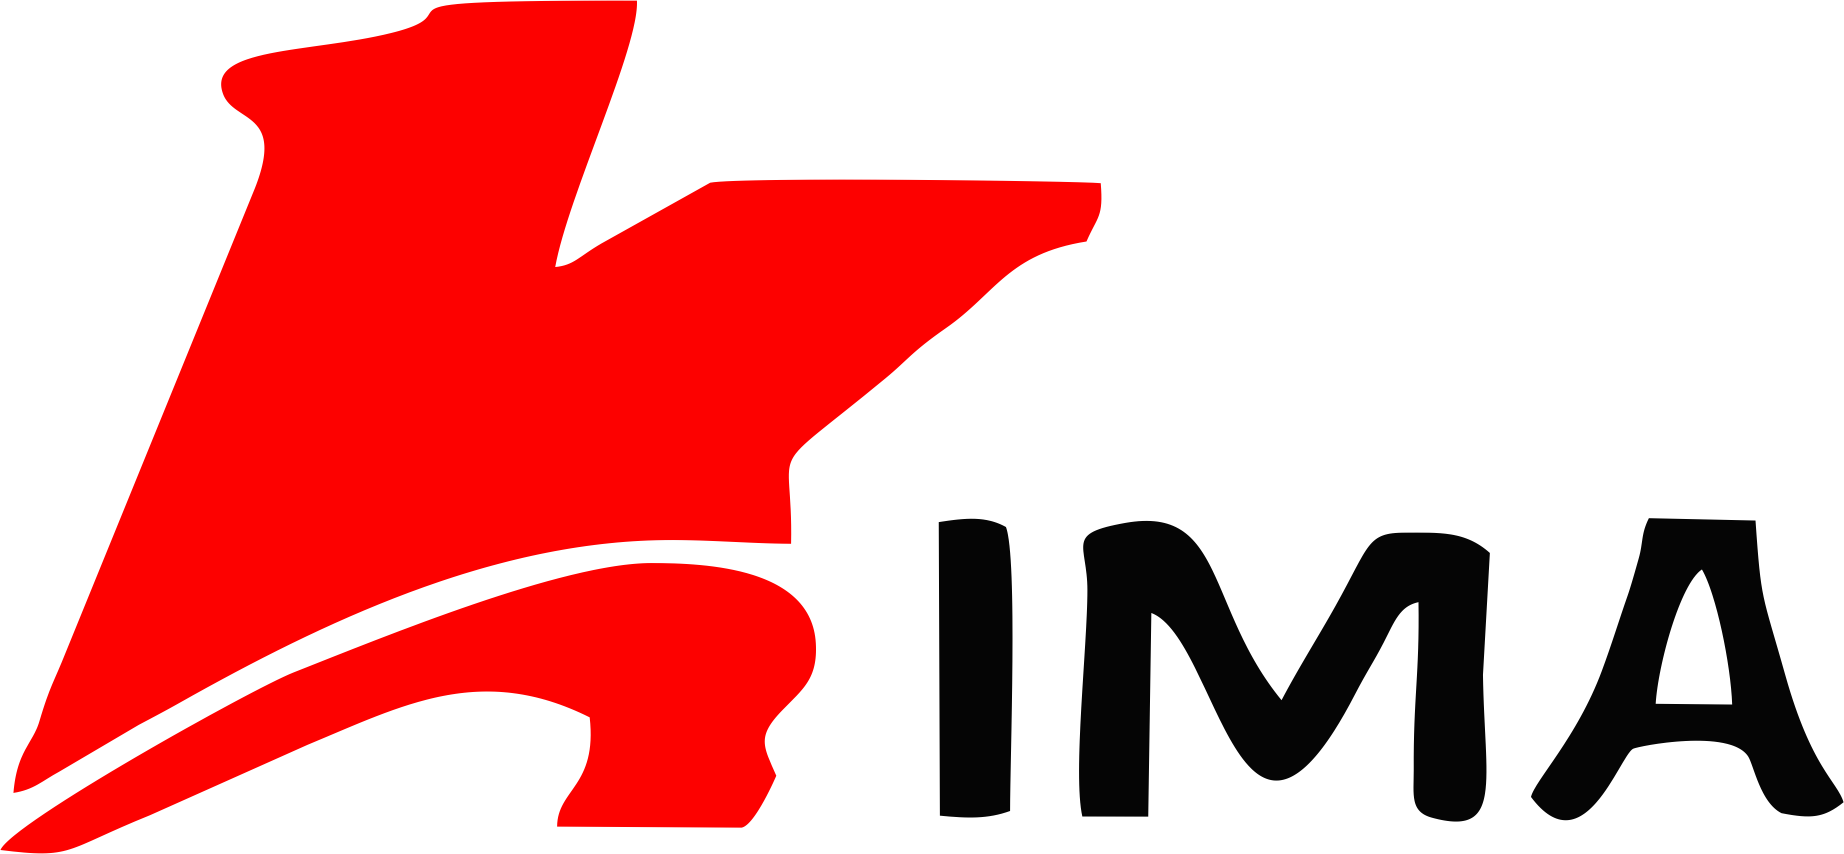 Kima Chemical Co., Ltd._logo